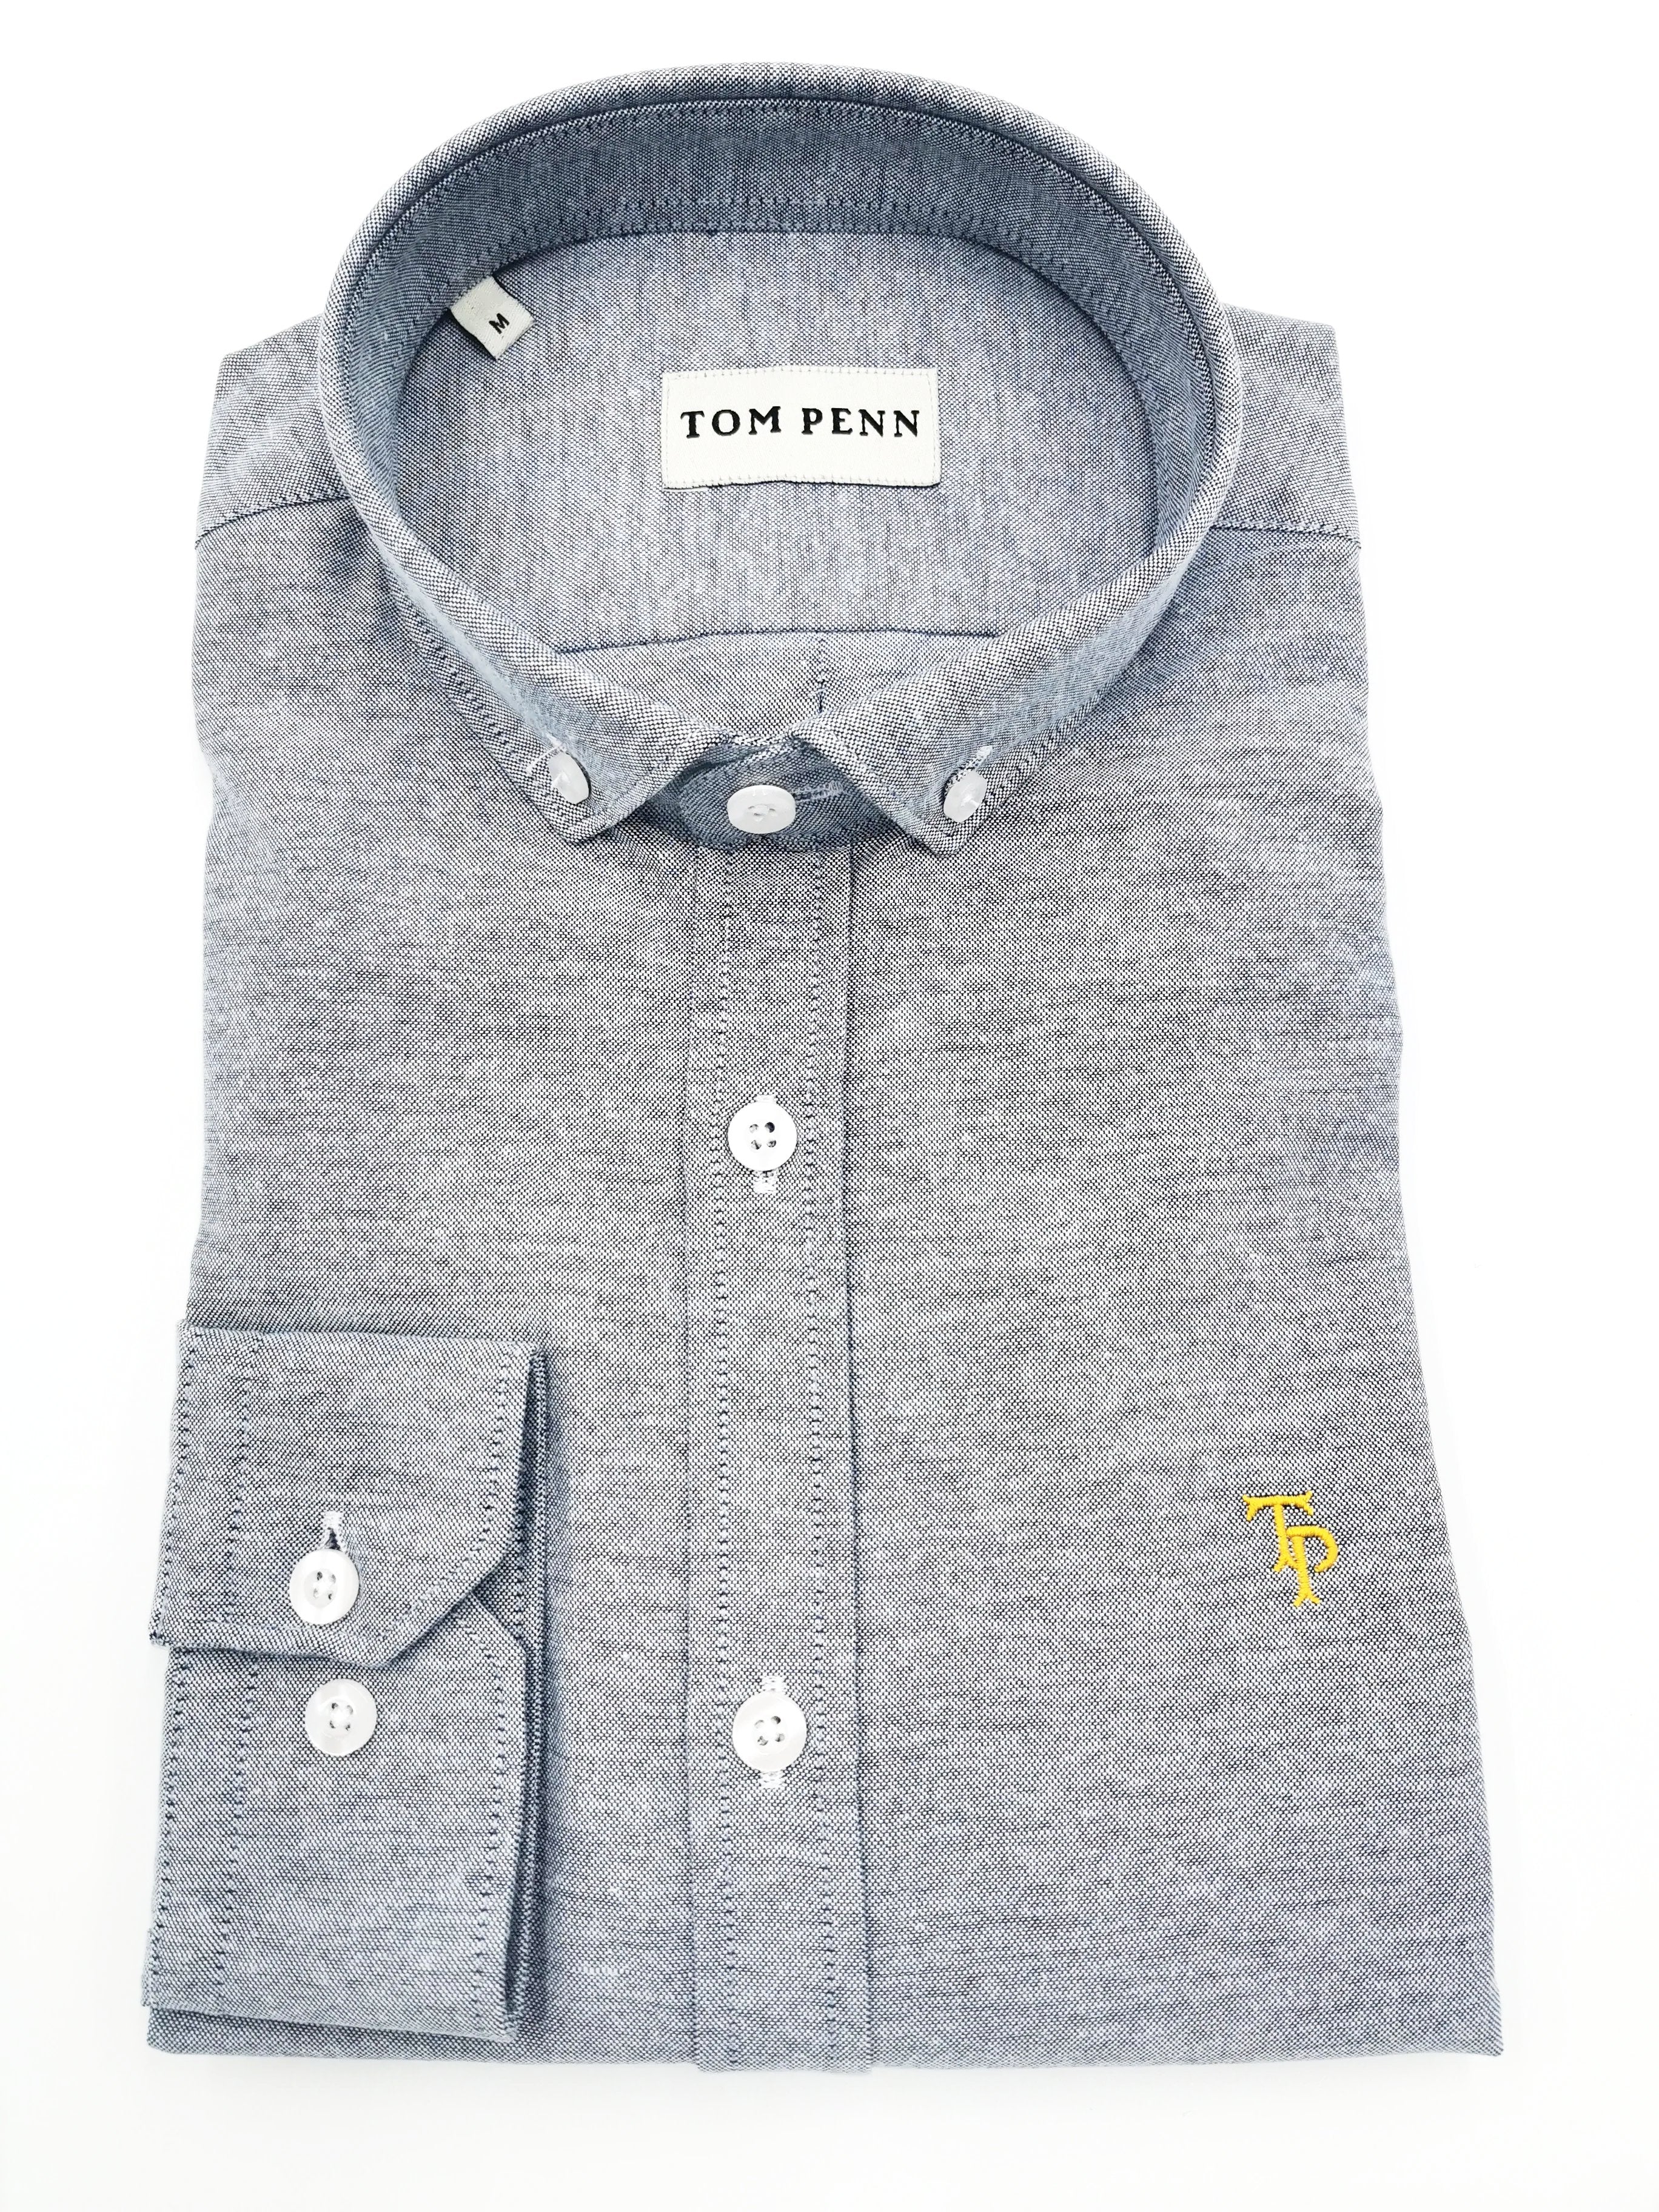 Men's Tom Penn Slim fit Button Down Charcoal Shirt